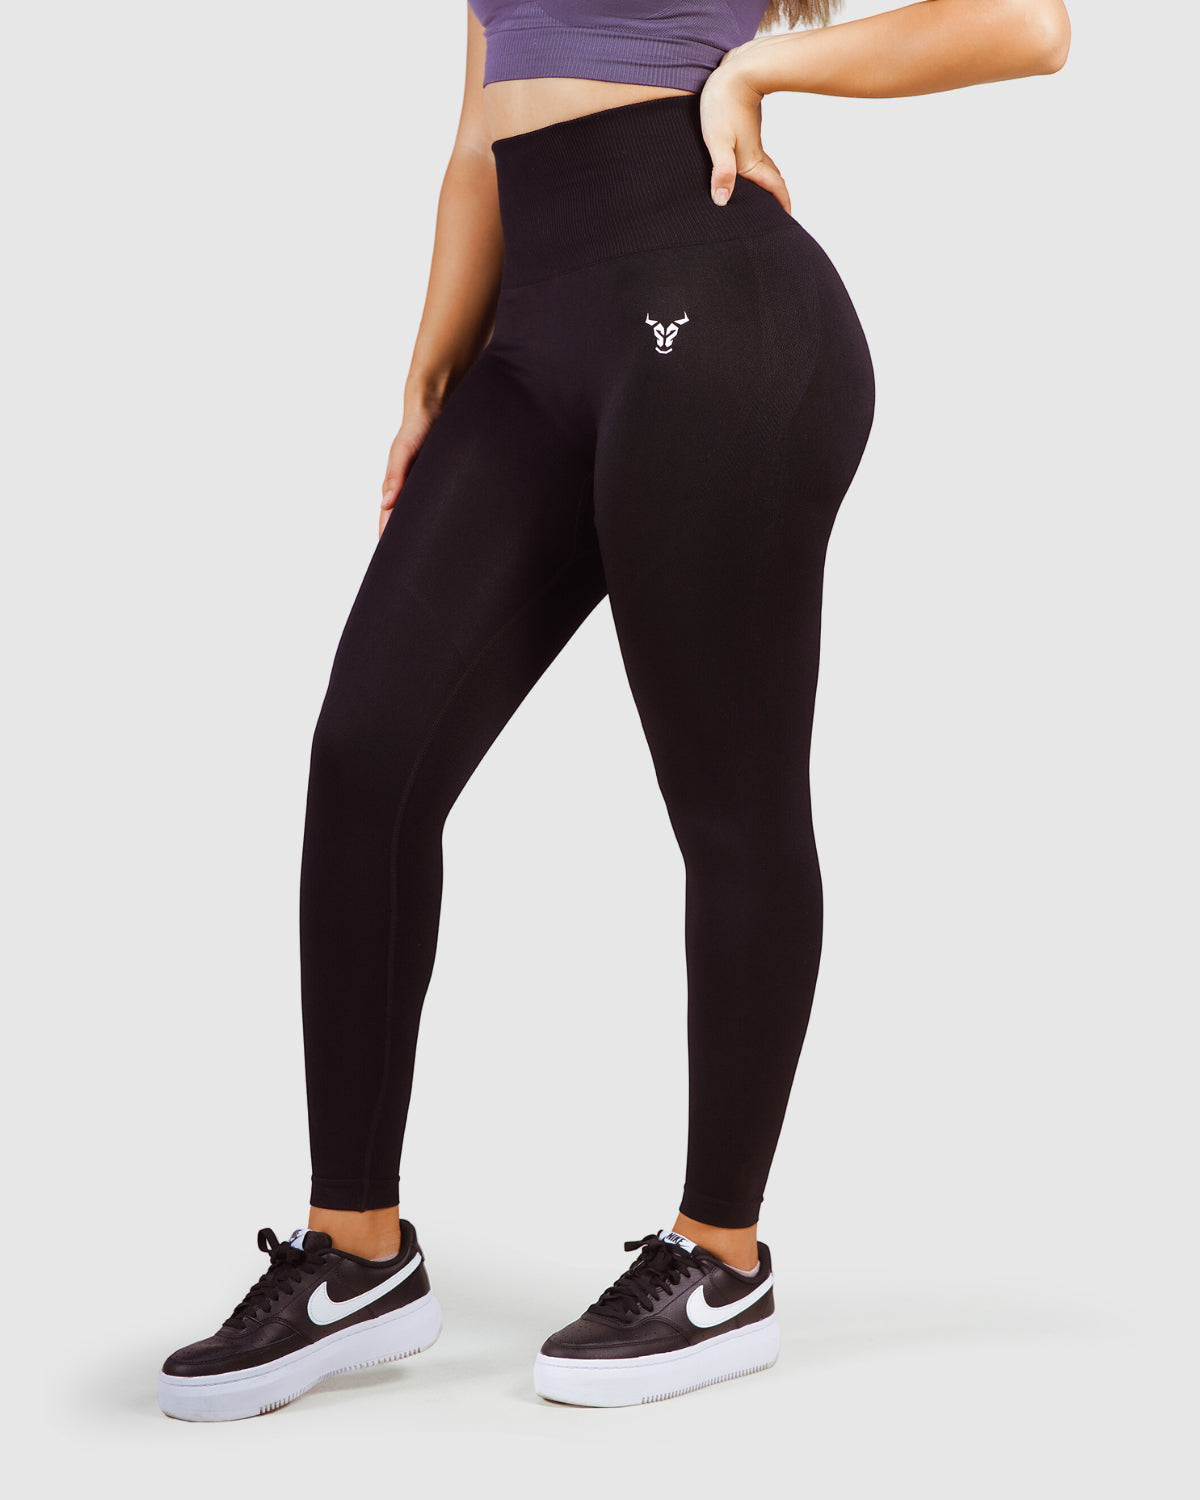 Seamless Black Women Bra Tights 92 Polyester 8 Spandex Leggings